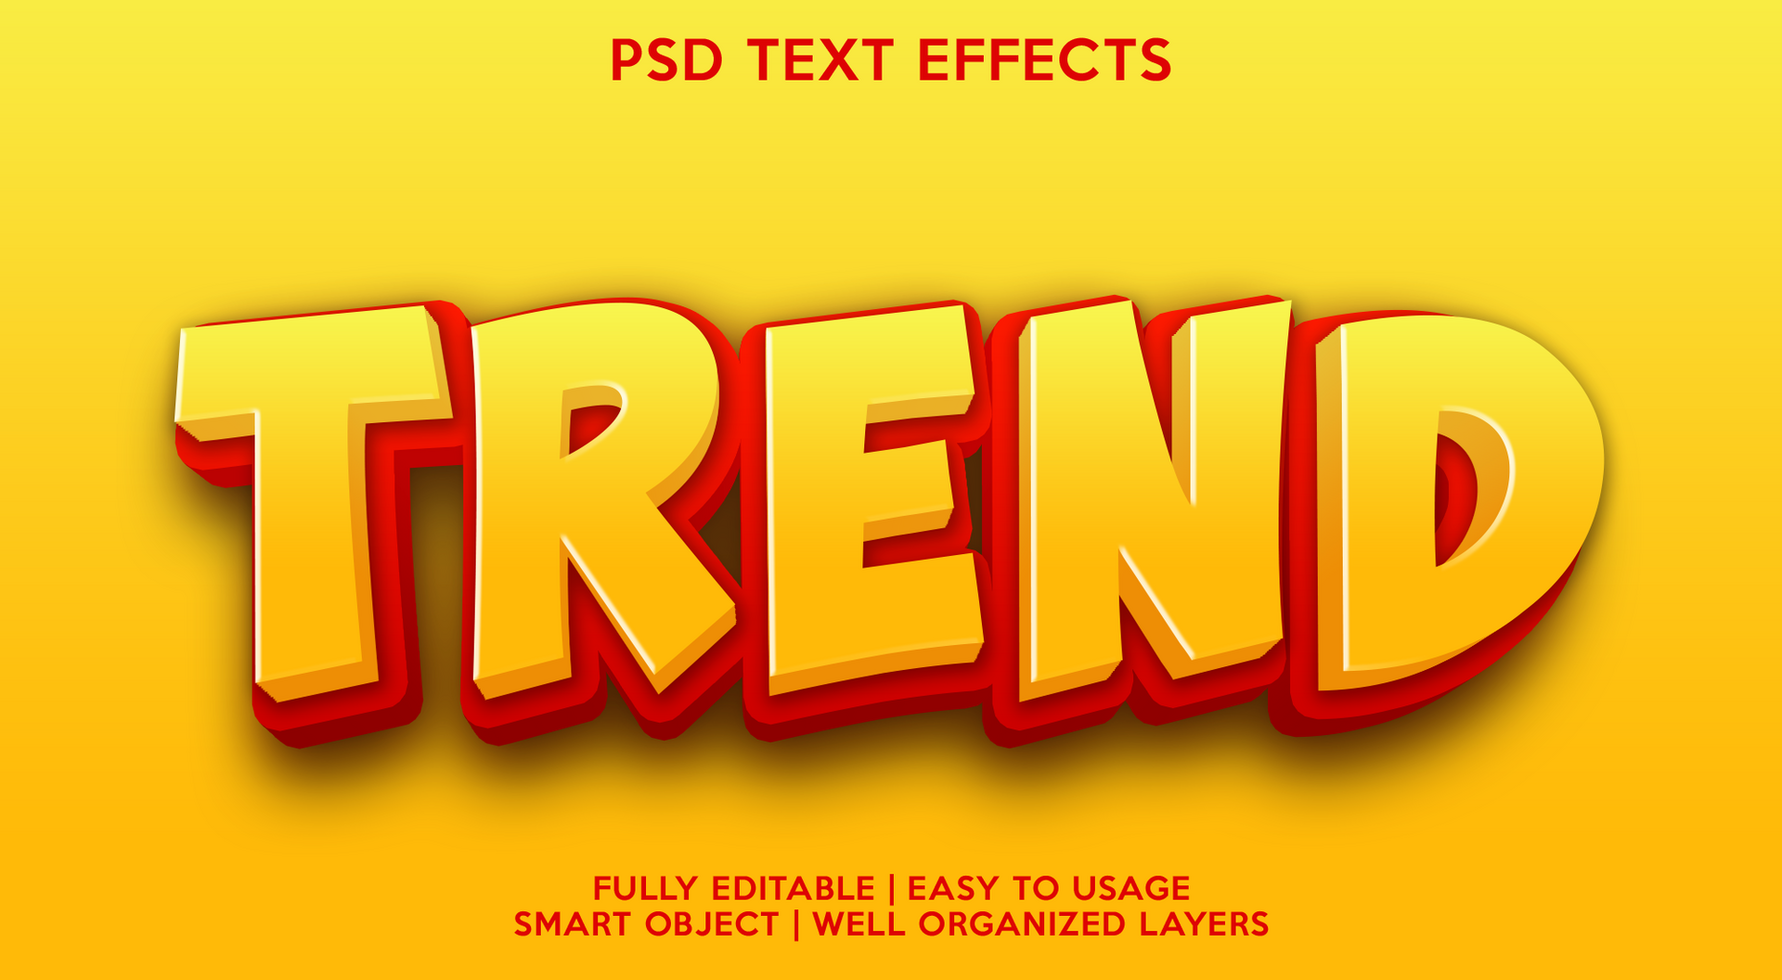 trend text effect template psd